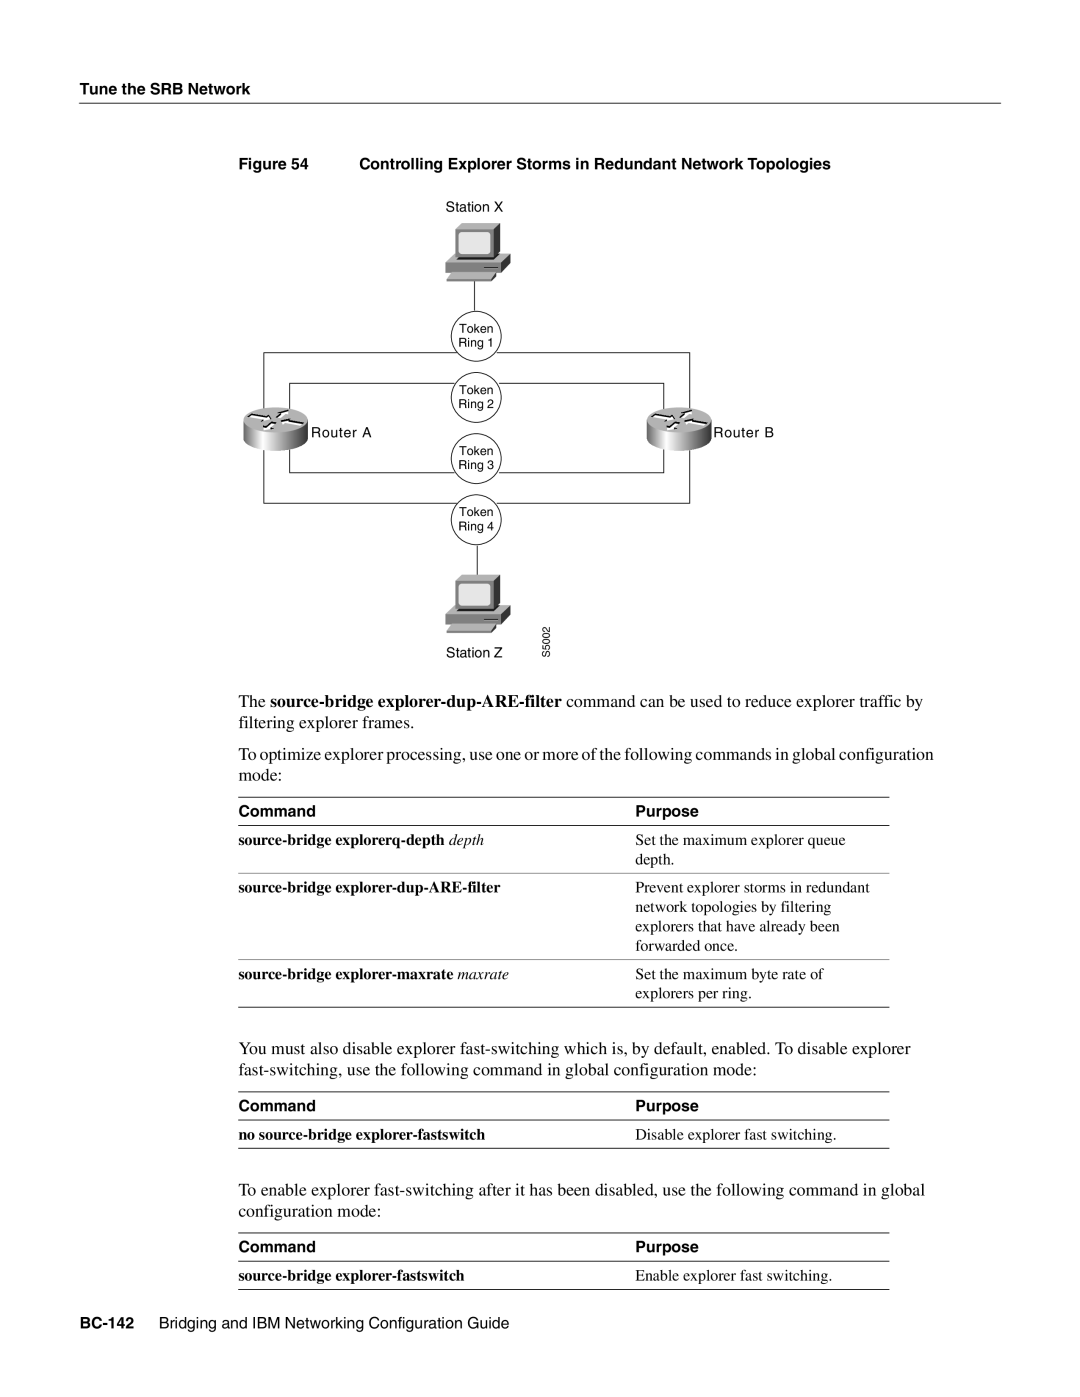 Cisco Systems BC-109 manual source-bridge explorerq-depth depth 